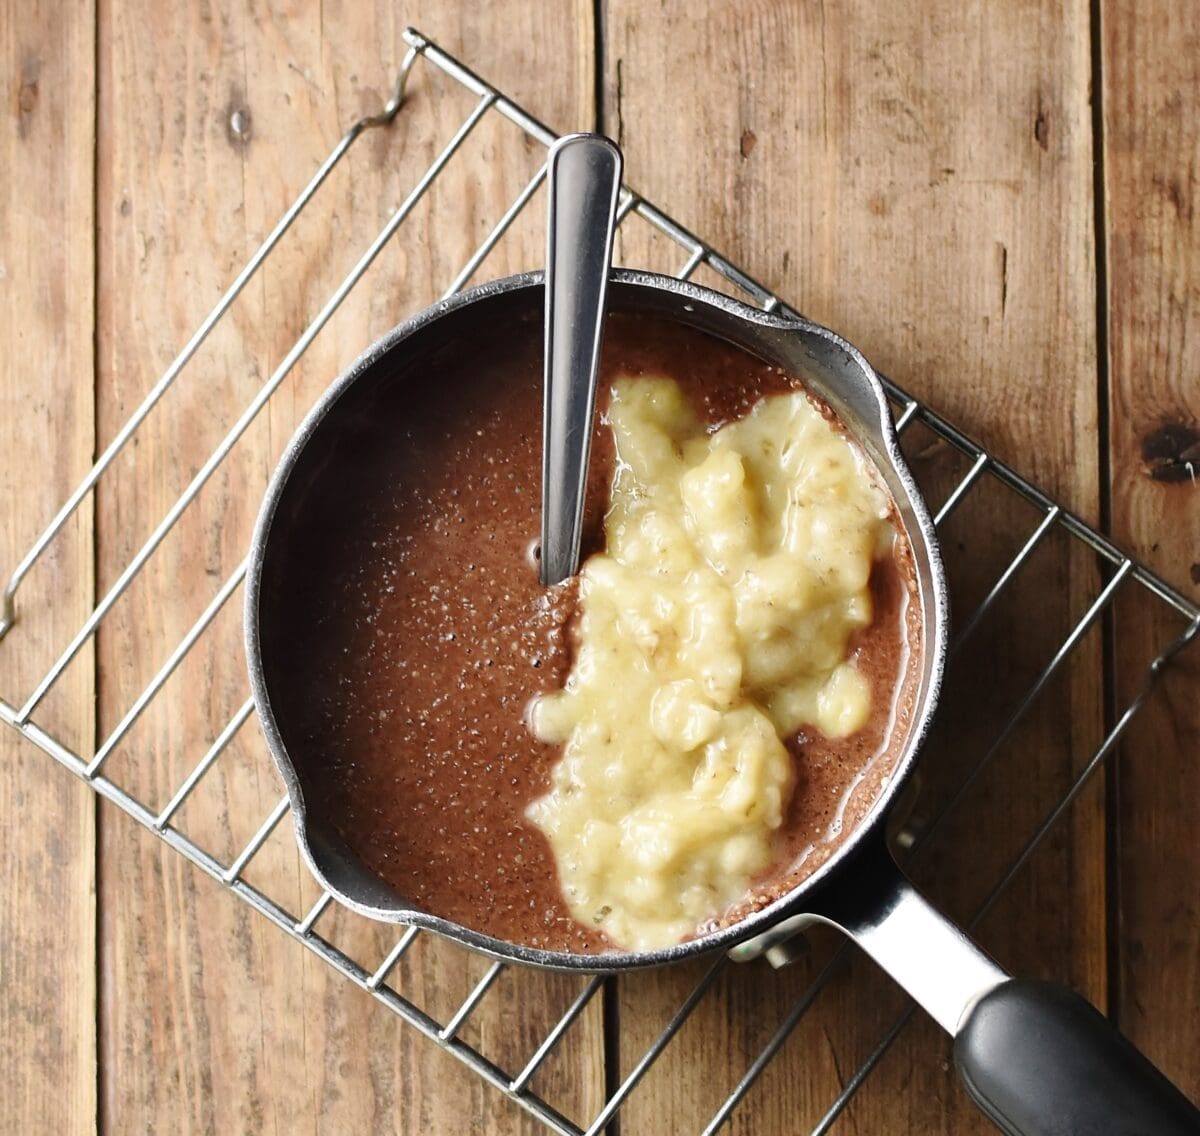 Chocolate quinoa porridge with mashed banana in saucepan with spoon.